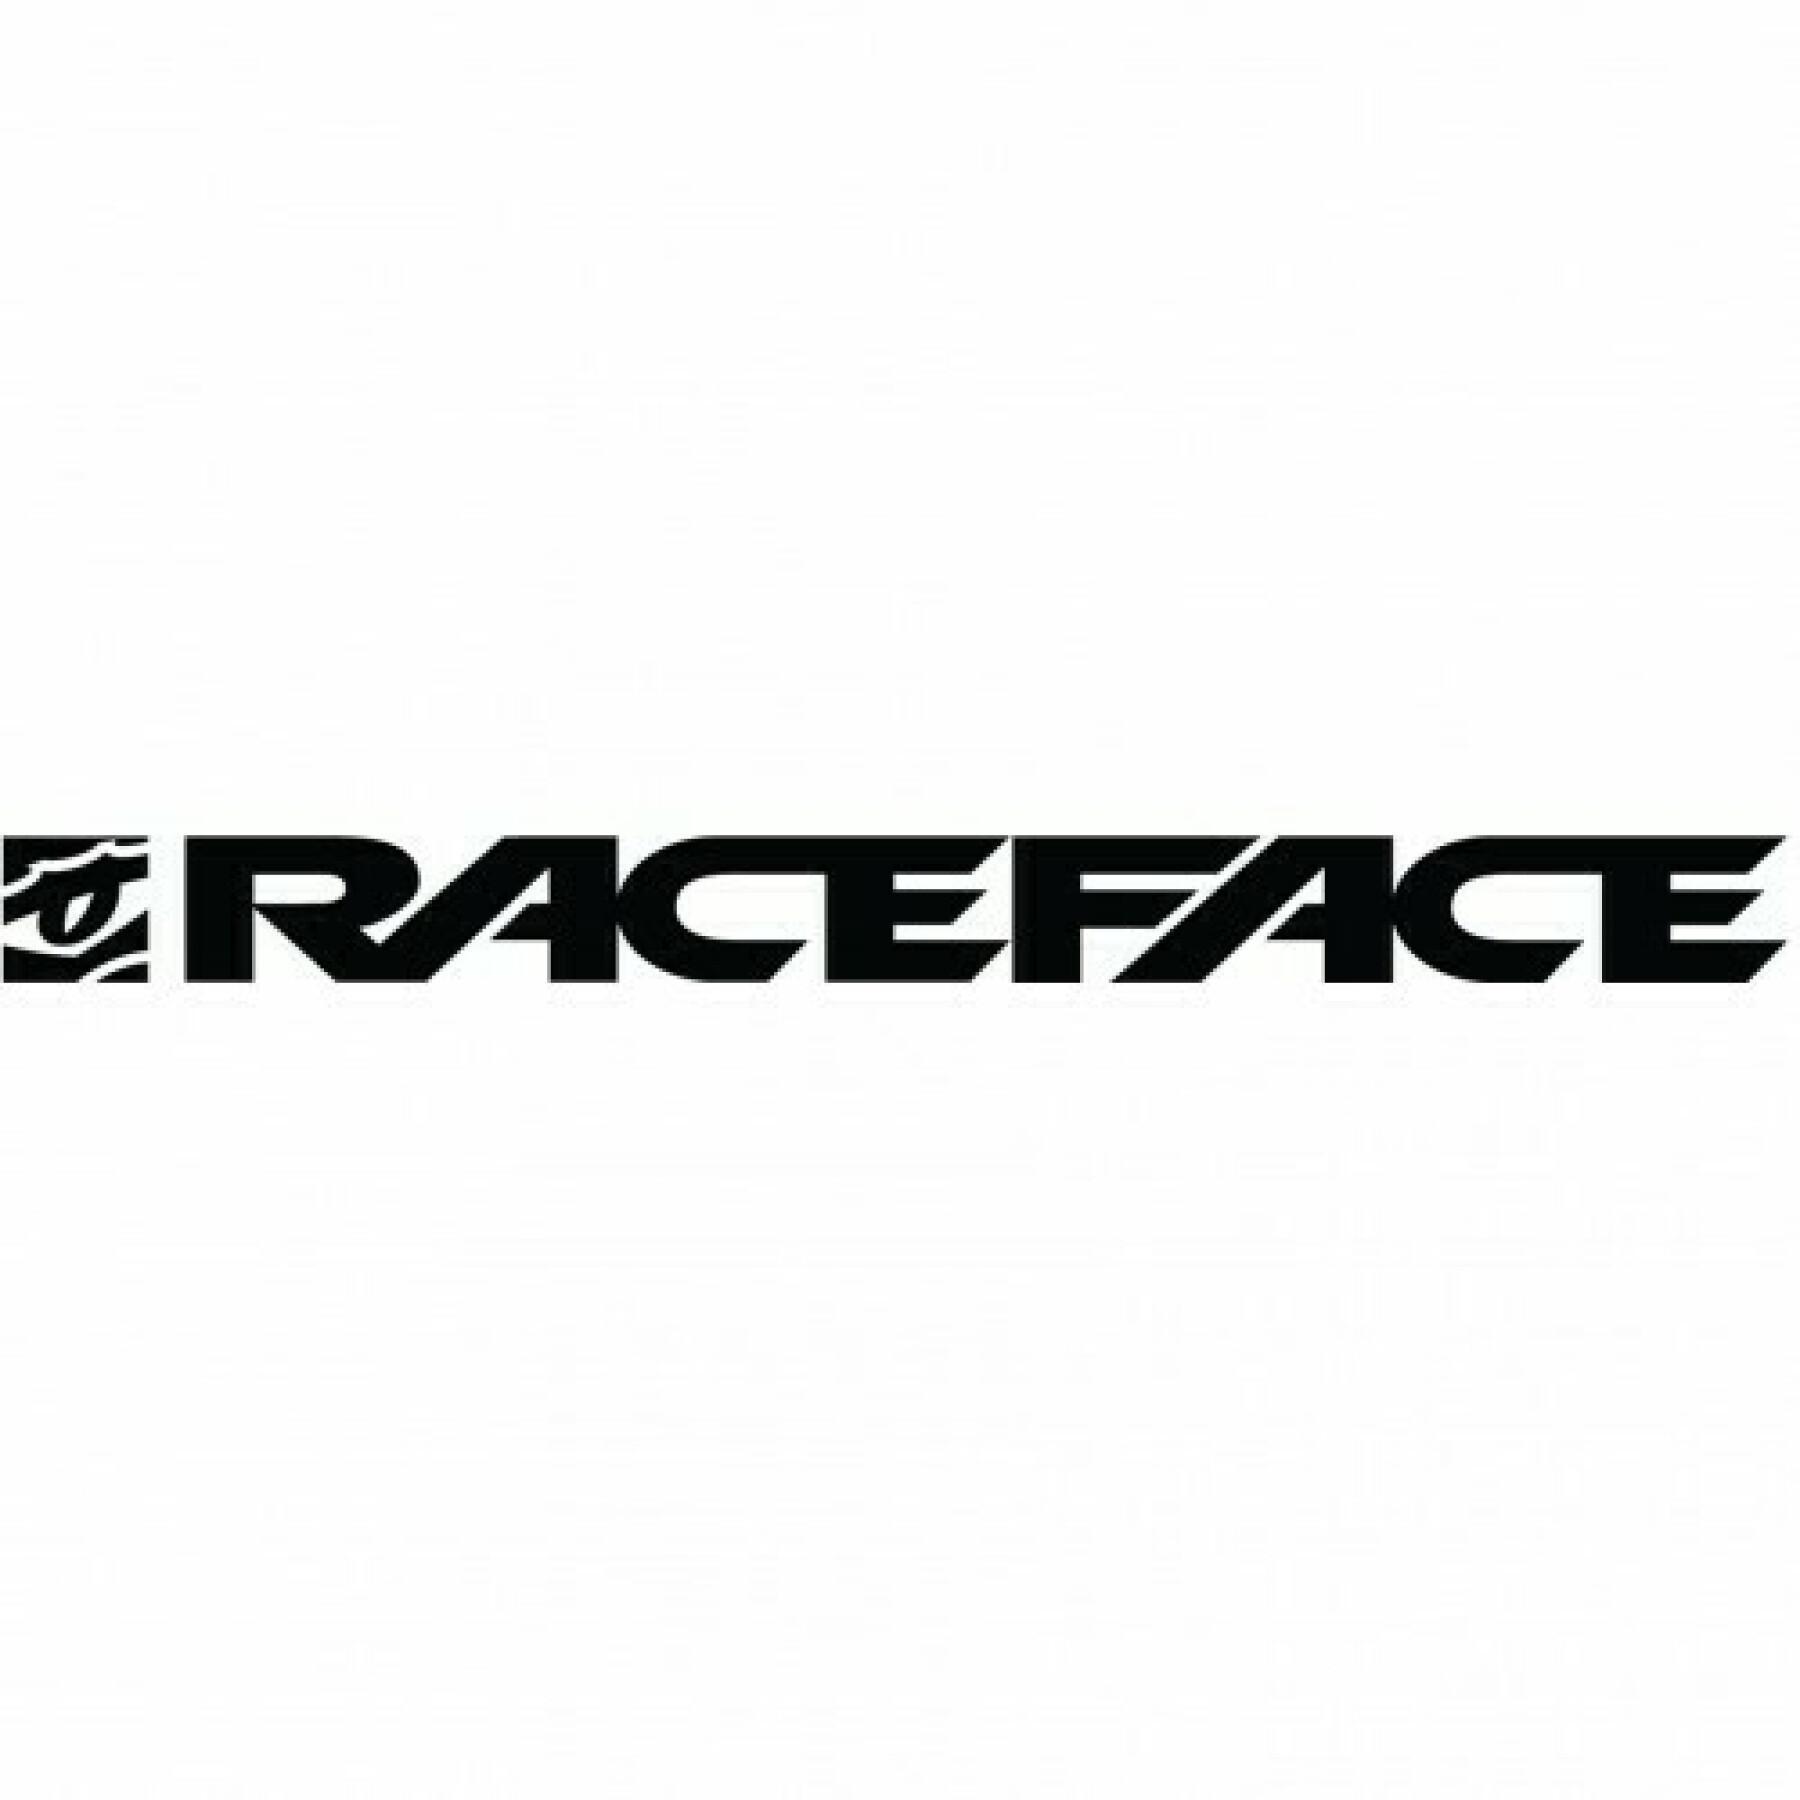 Rear hub Race Face vault 12x148 boost - 32t - corps xd